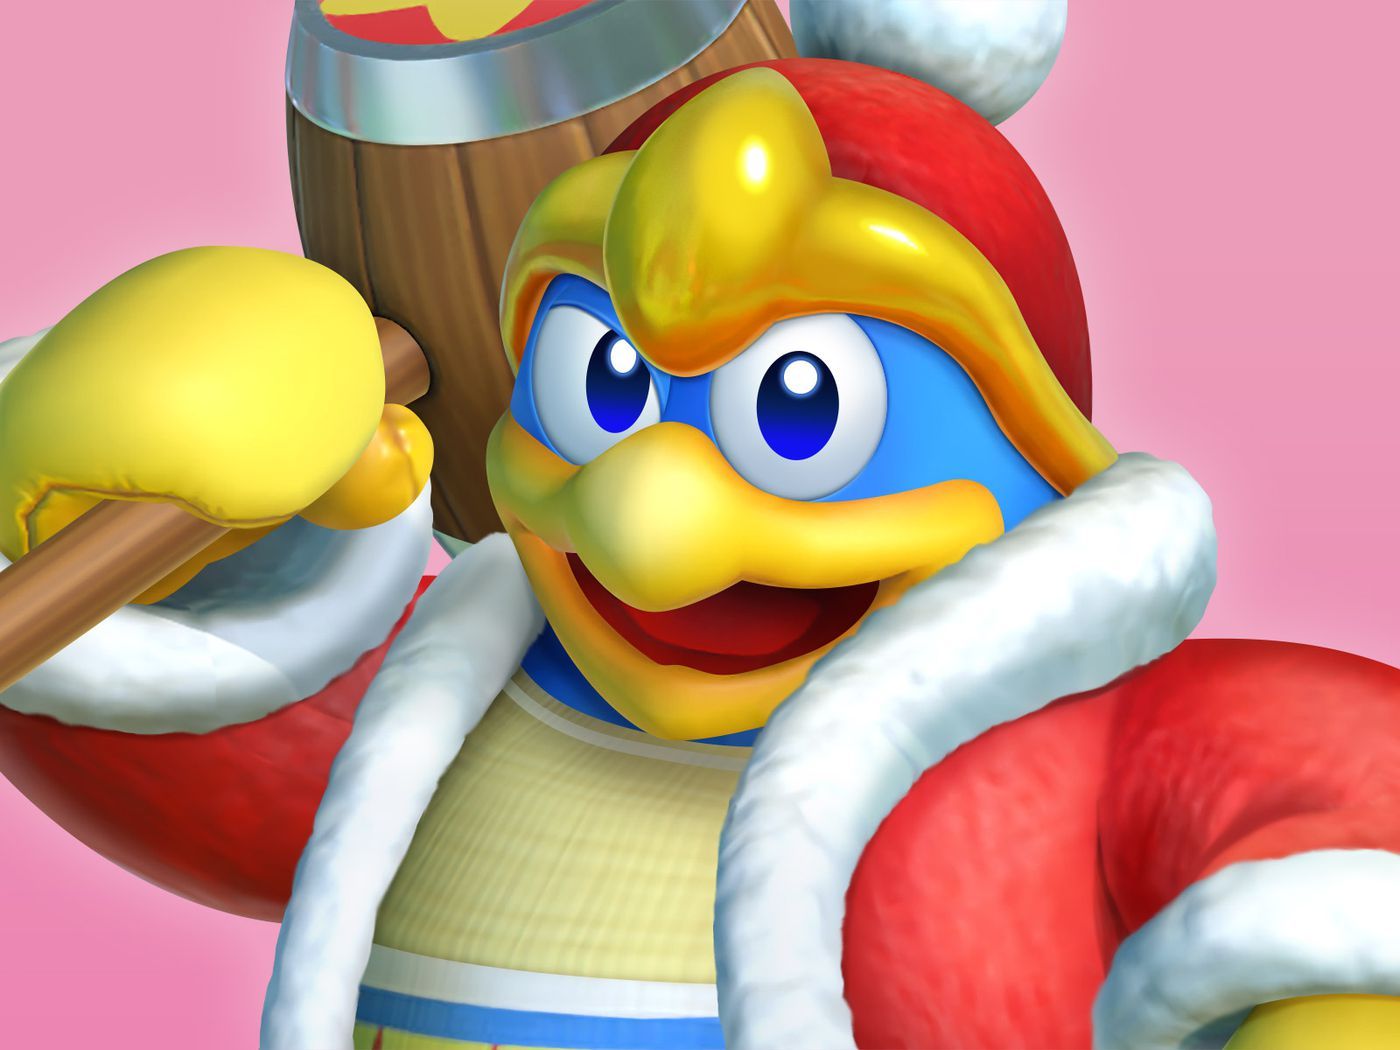 New Kirby game reveals King Dedede's secret